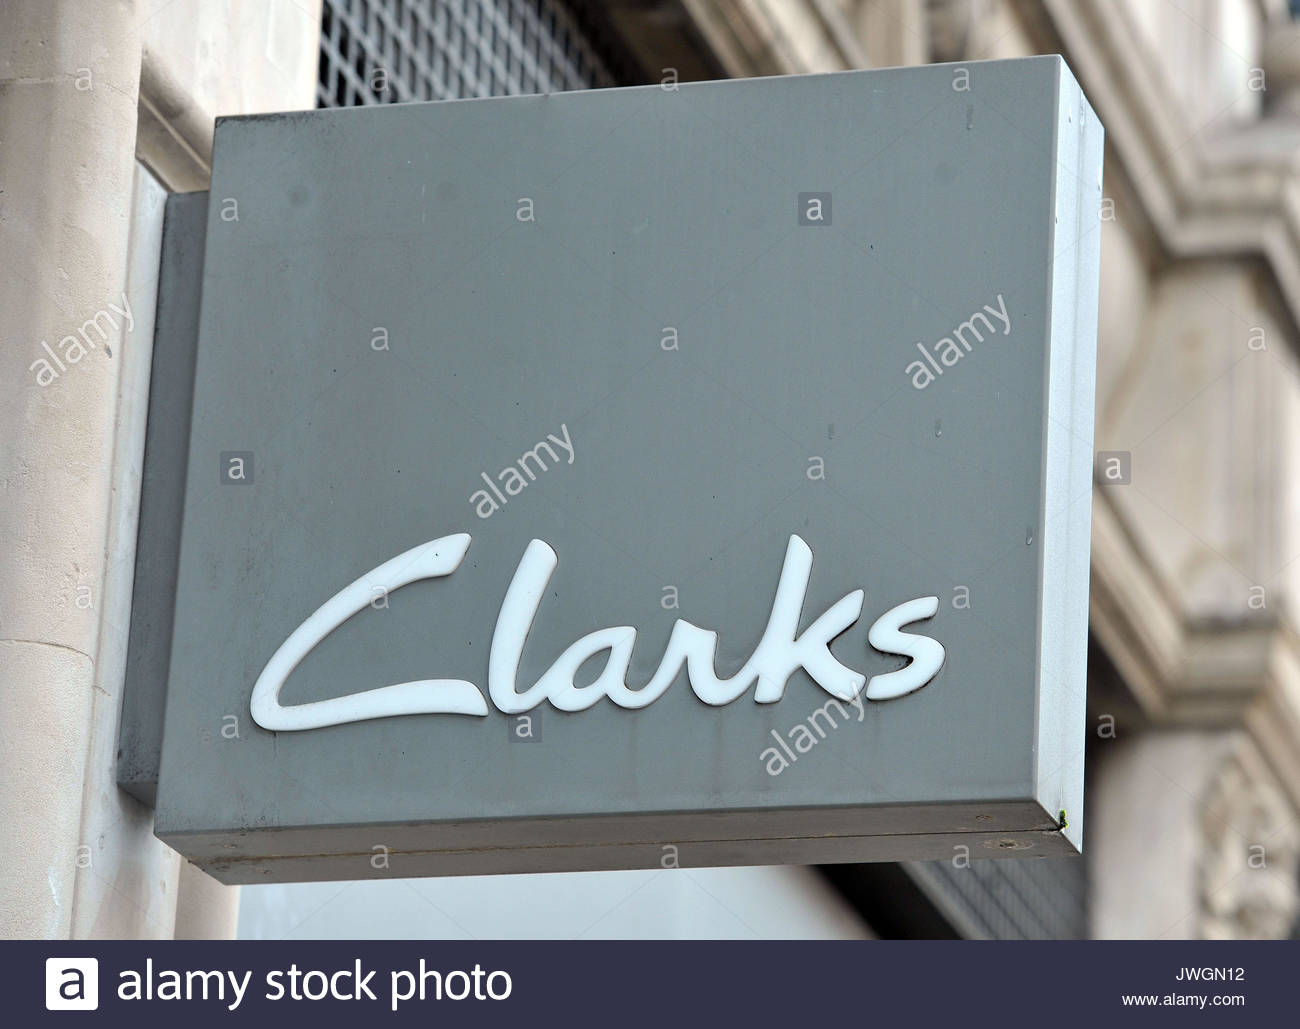 clarks central london